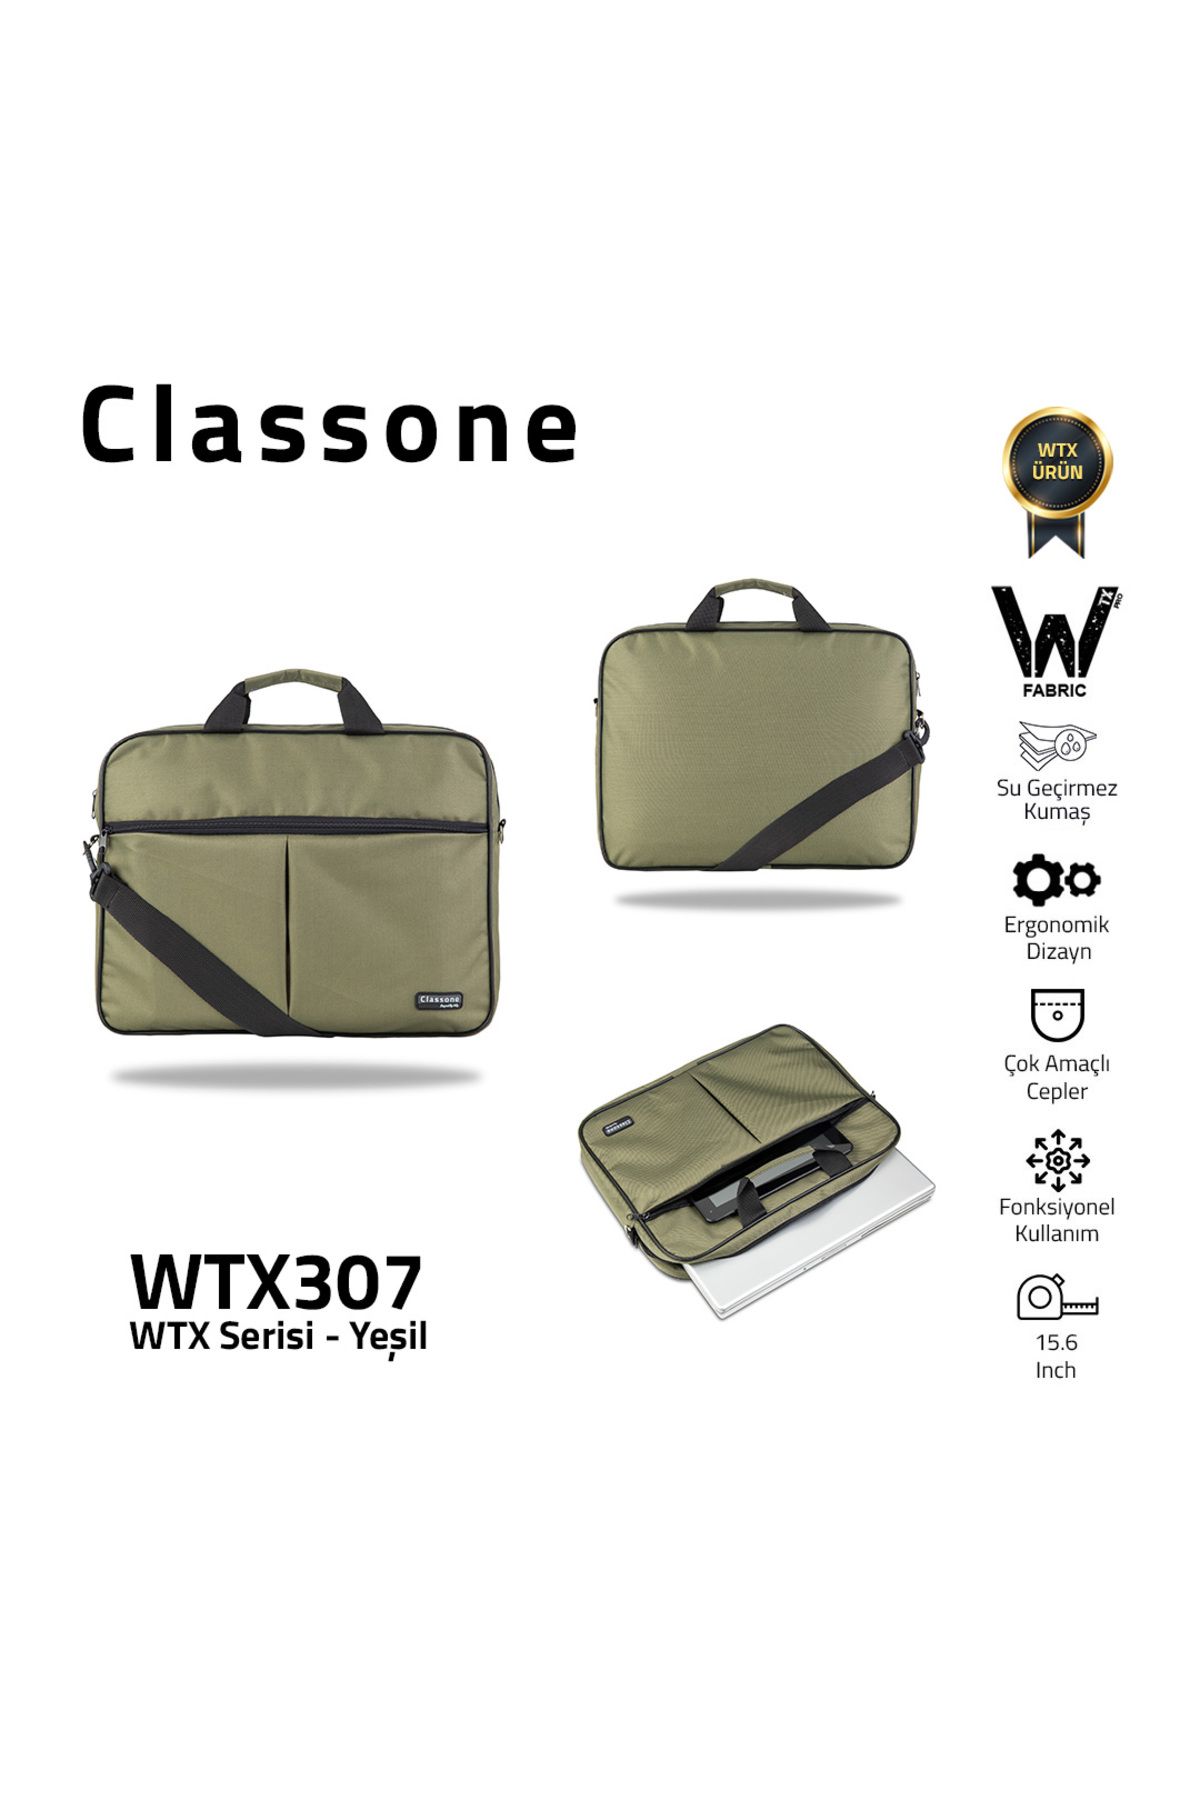 Classone Wtx307 Wtxpro serisi 15.6 Inch Uyumlu Su Geçirmez Kumaş Macbook, Laptop , Notebook El Çantası